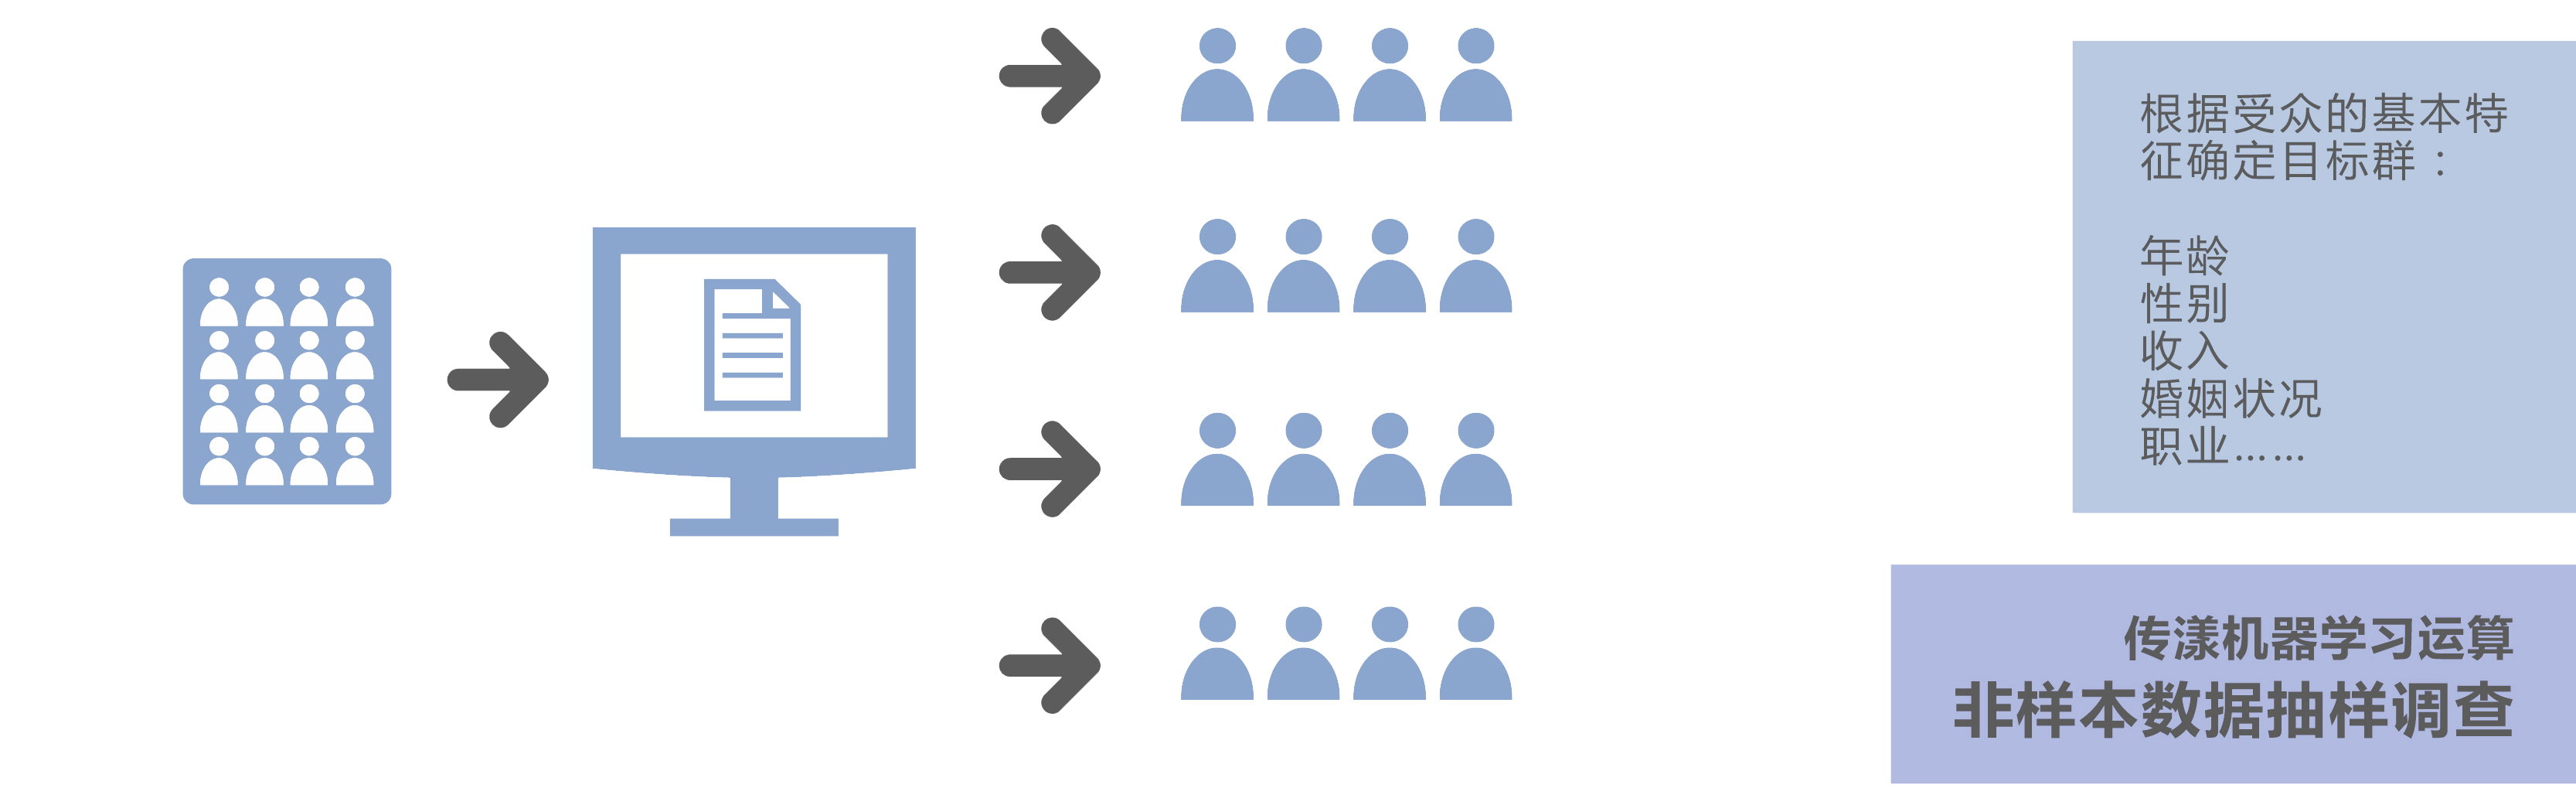 Figura 1 Análise de modelo popular 1.png